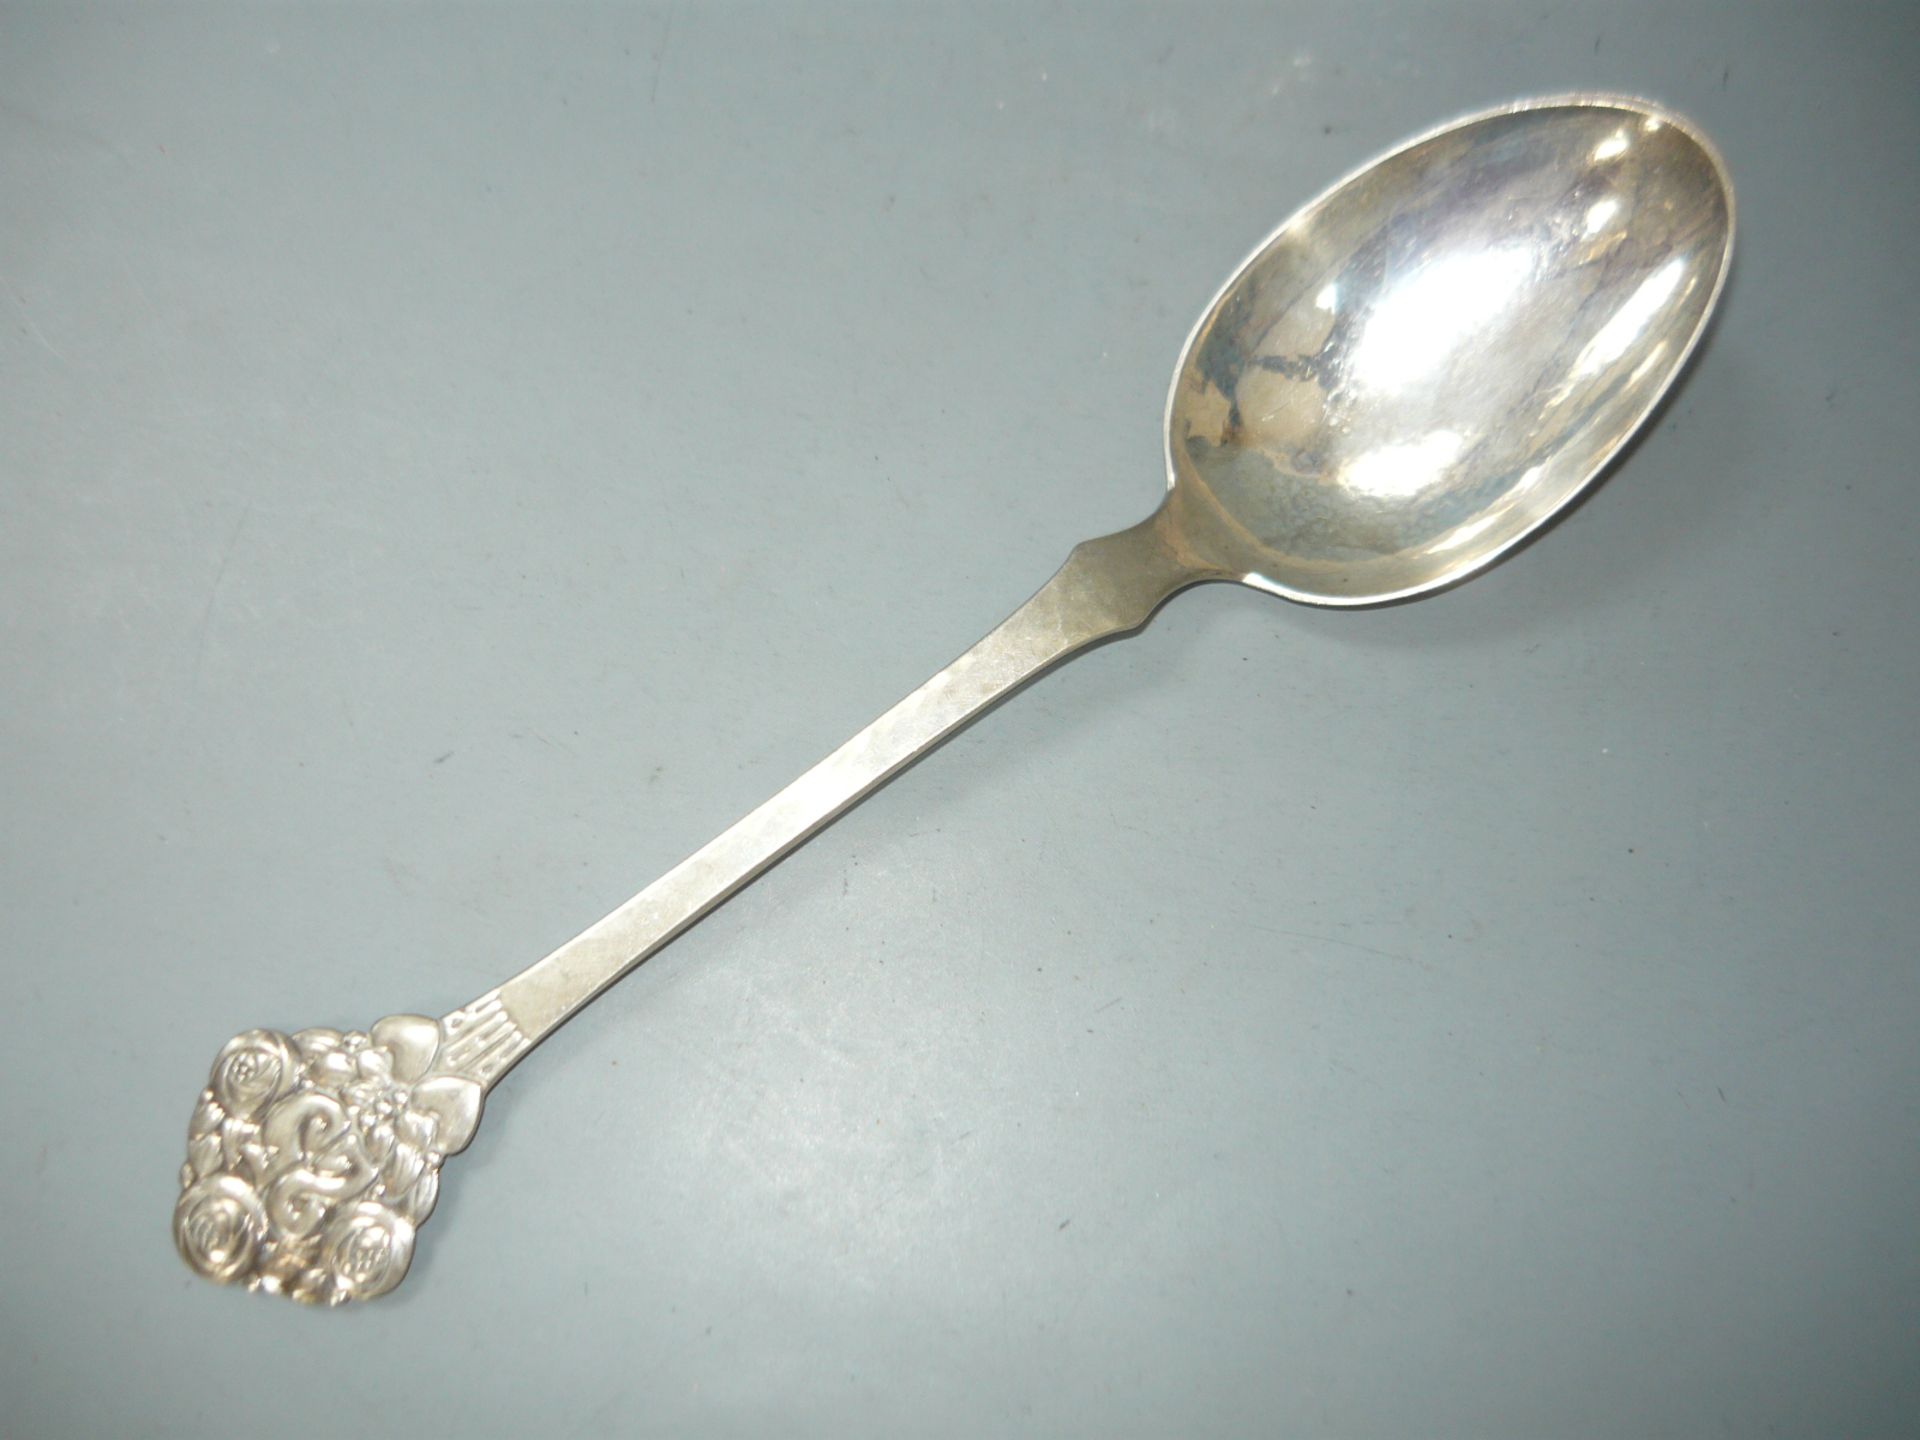 Vorlegelöffel. 830er Silber. Dänemark. Handarbeit. L. 26cm. Ca. 69gr. // English: Serving spoon. 830